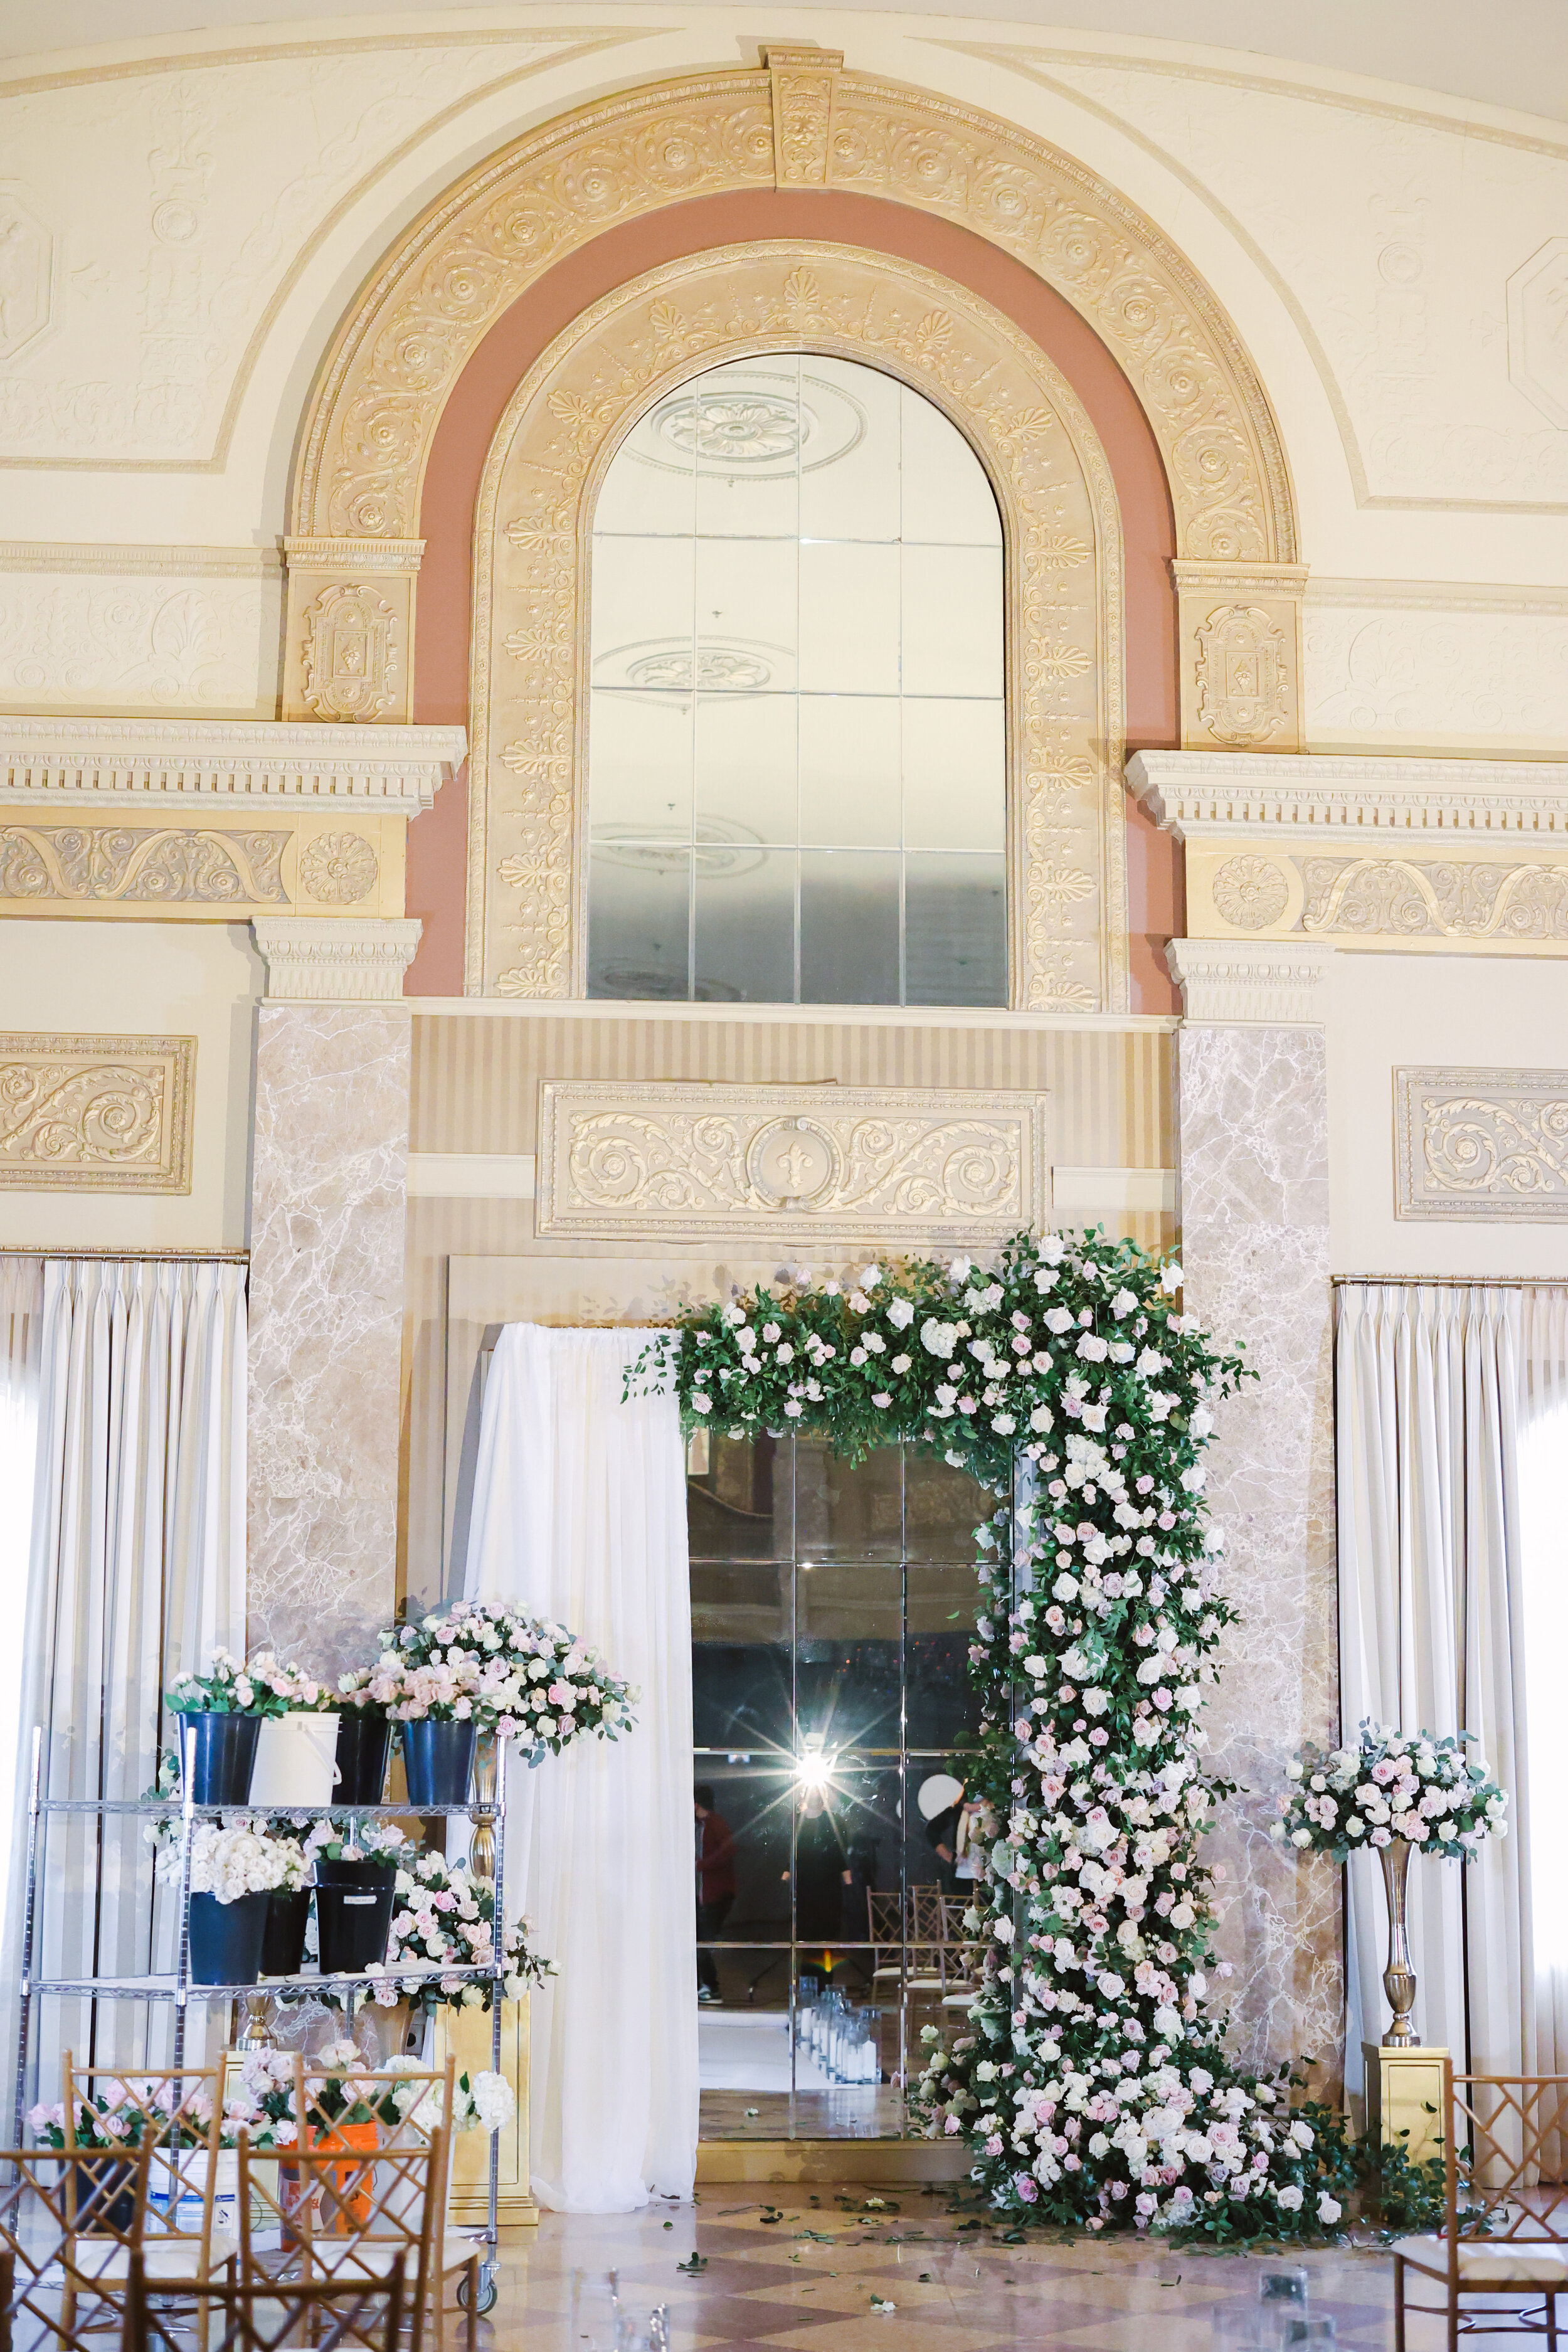 Belli-Fiori-Saint-Louis-Wedding-Florist-Event-Setup-7.jpg